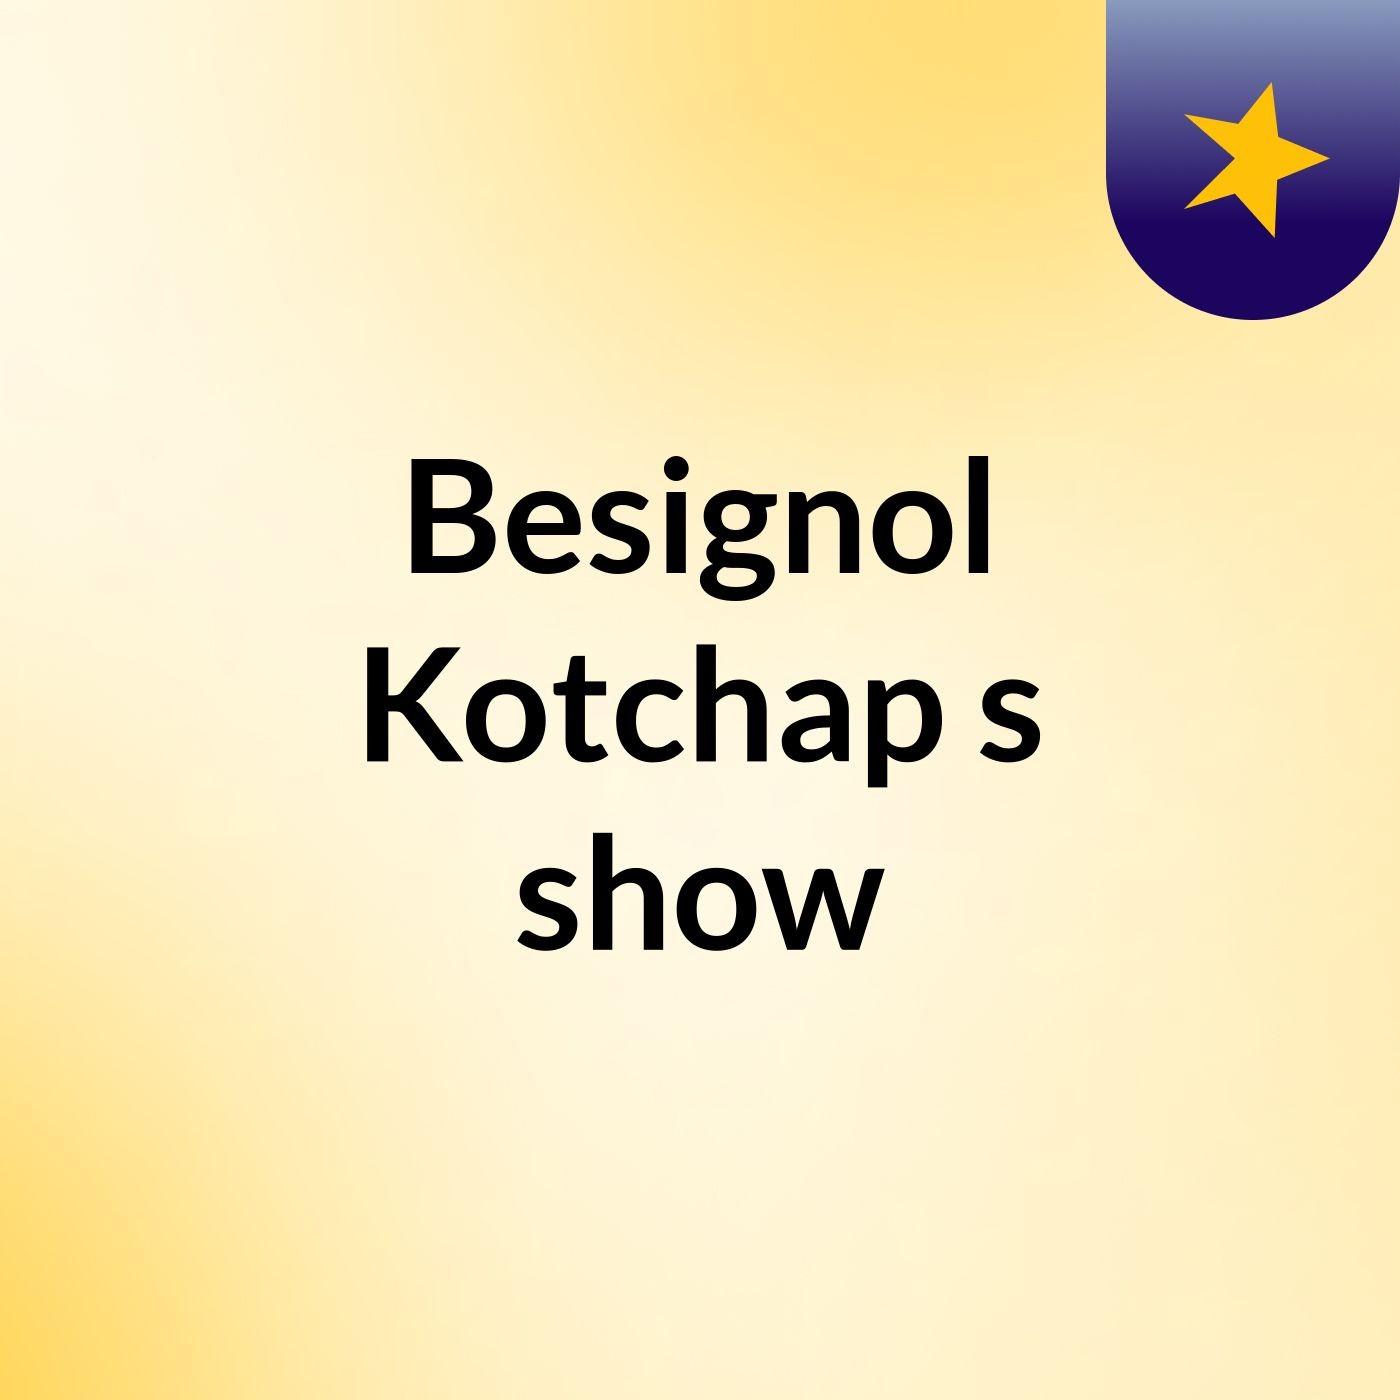 Besignol Kotchap's show